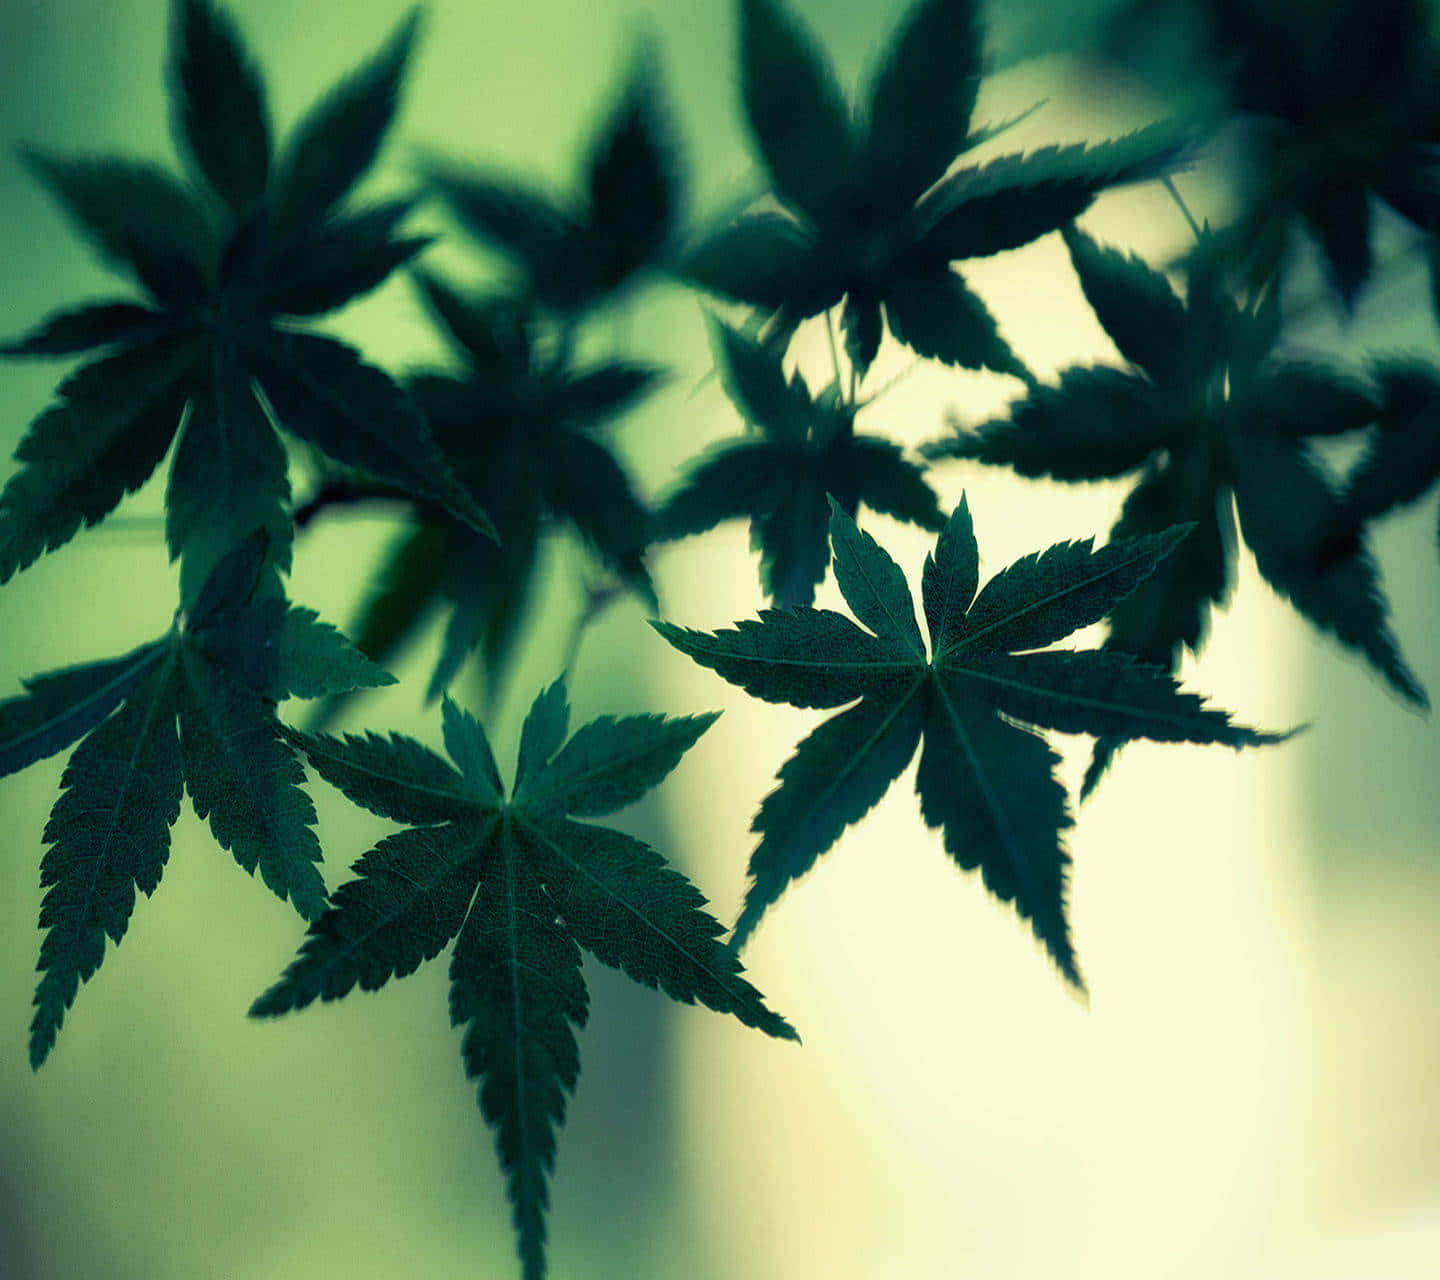 Silhouette Of Several Marijuana Leaves